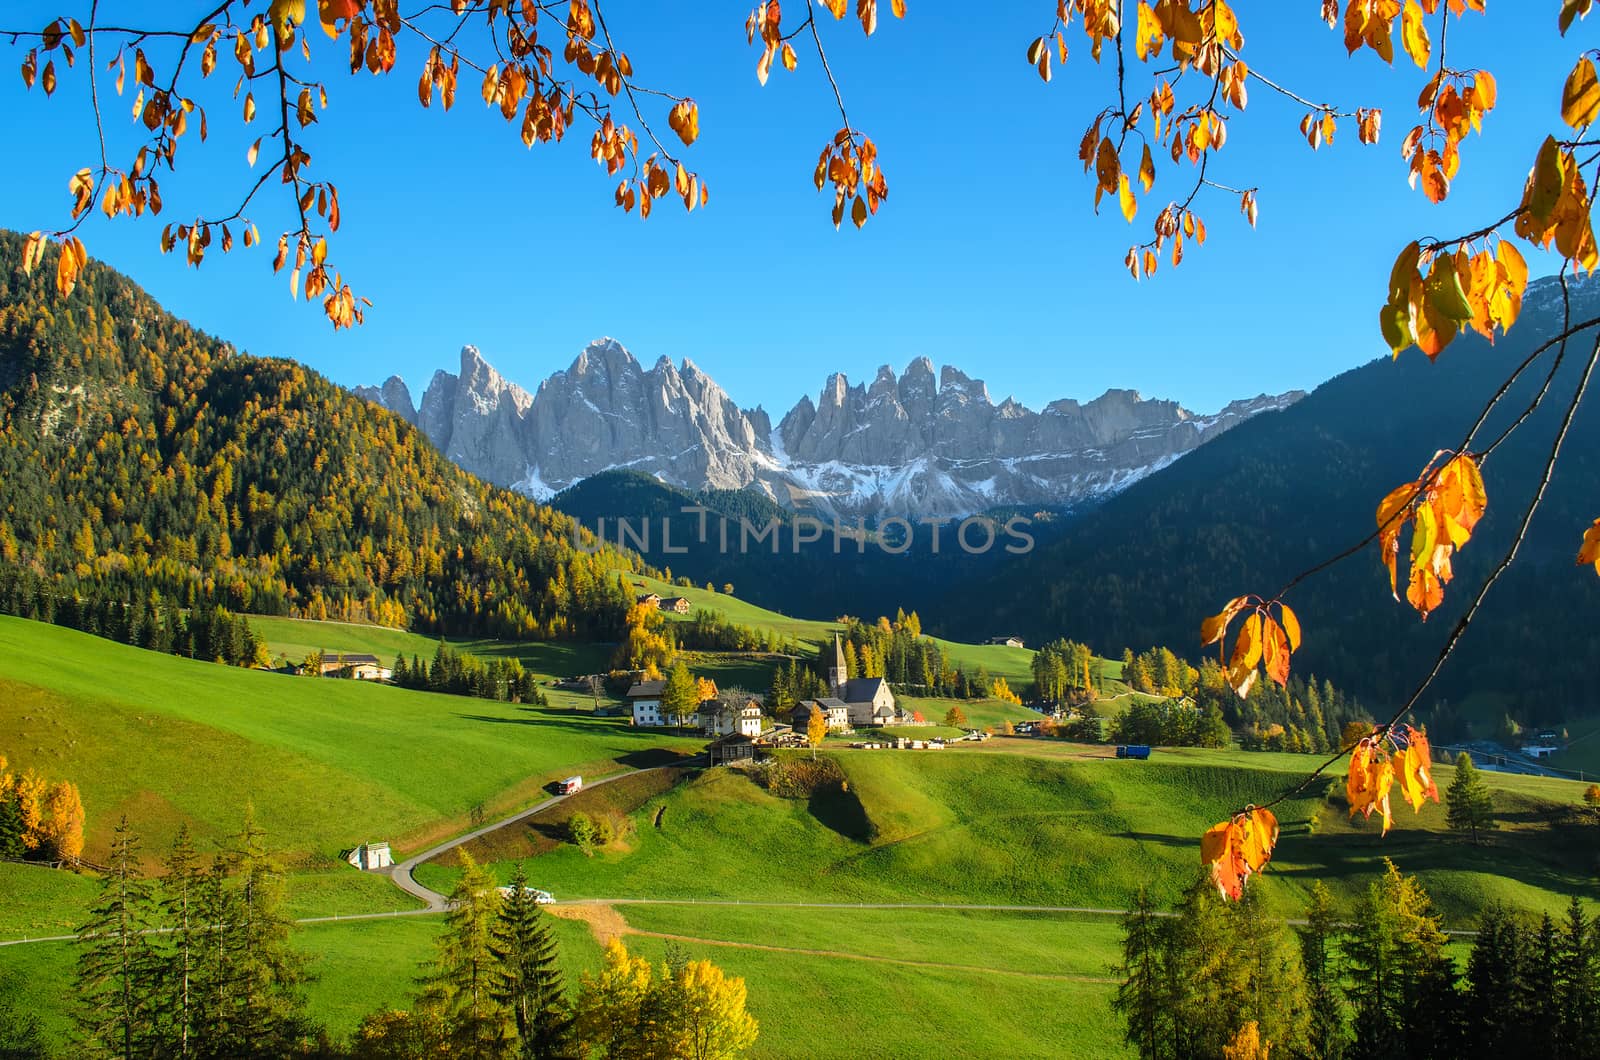 Dolomites mountain village in autumn by pljvv